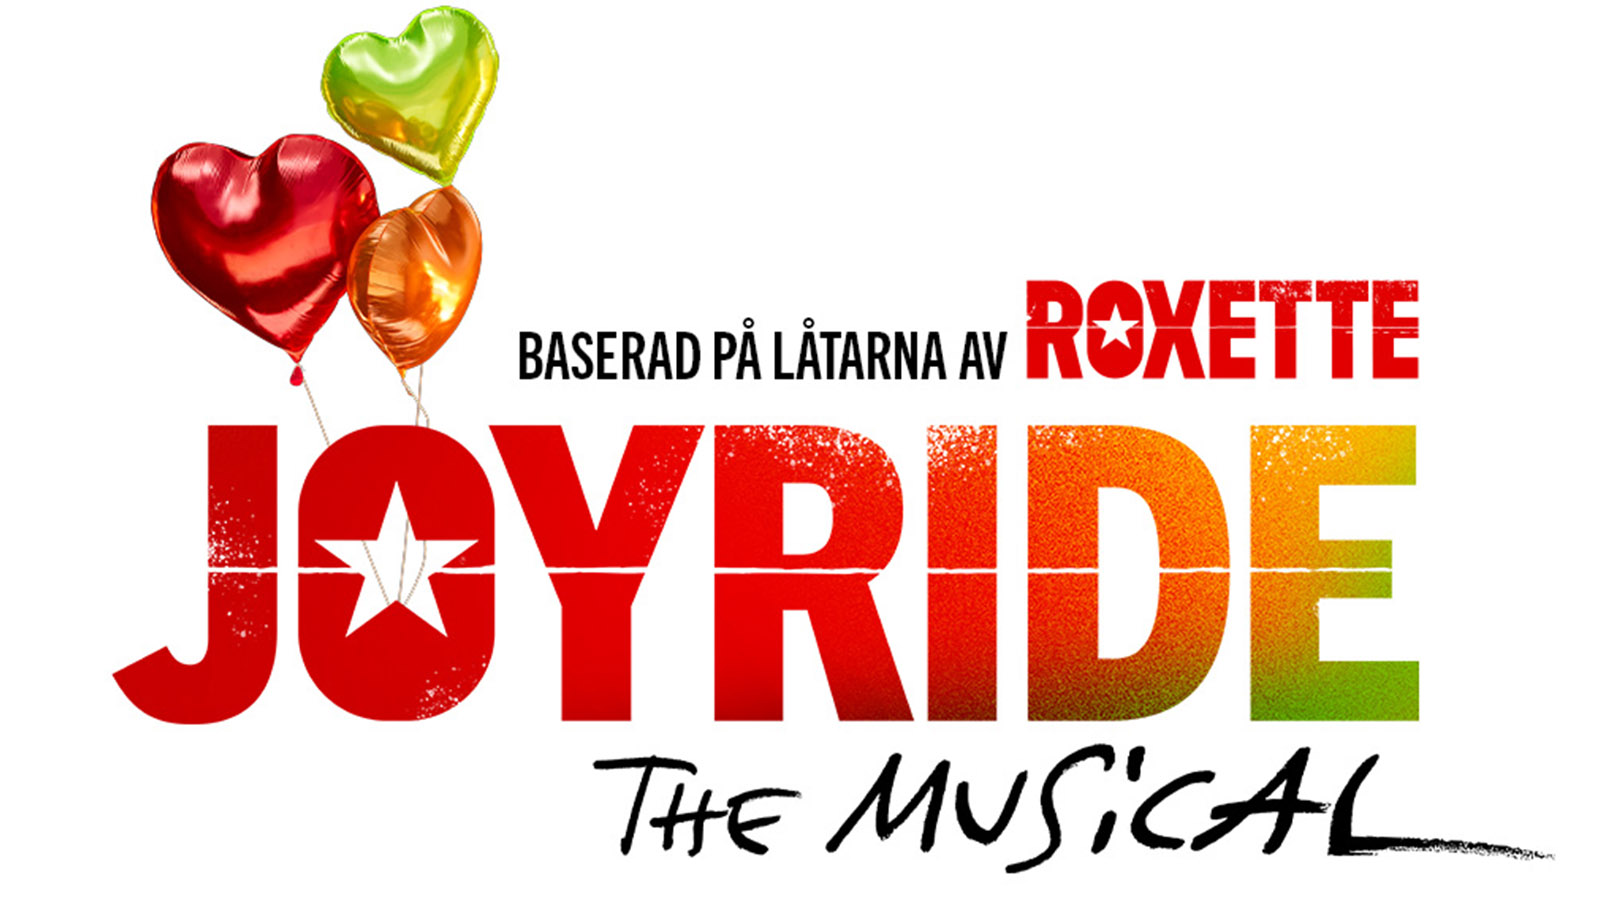 Joyride, The musical